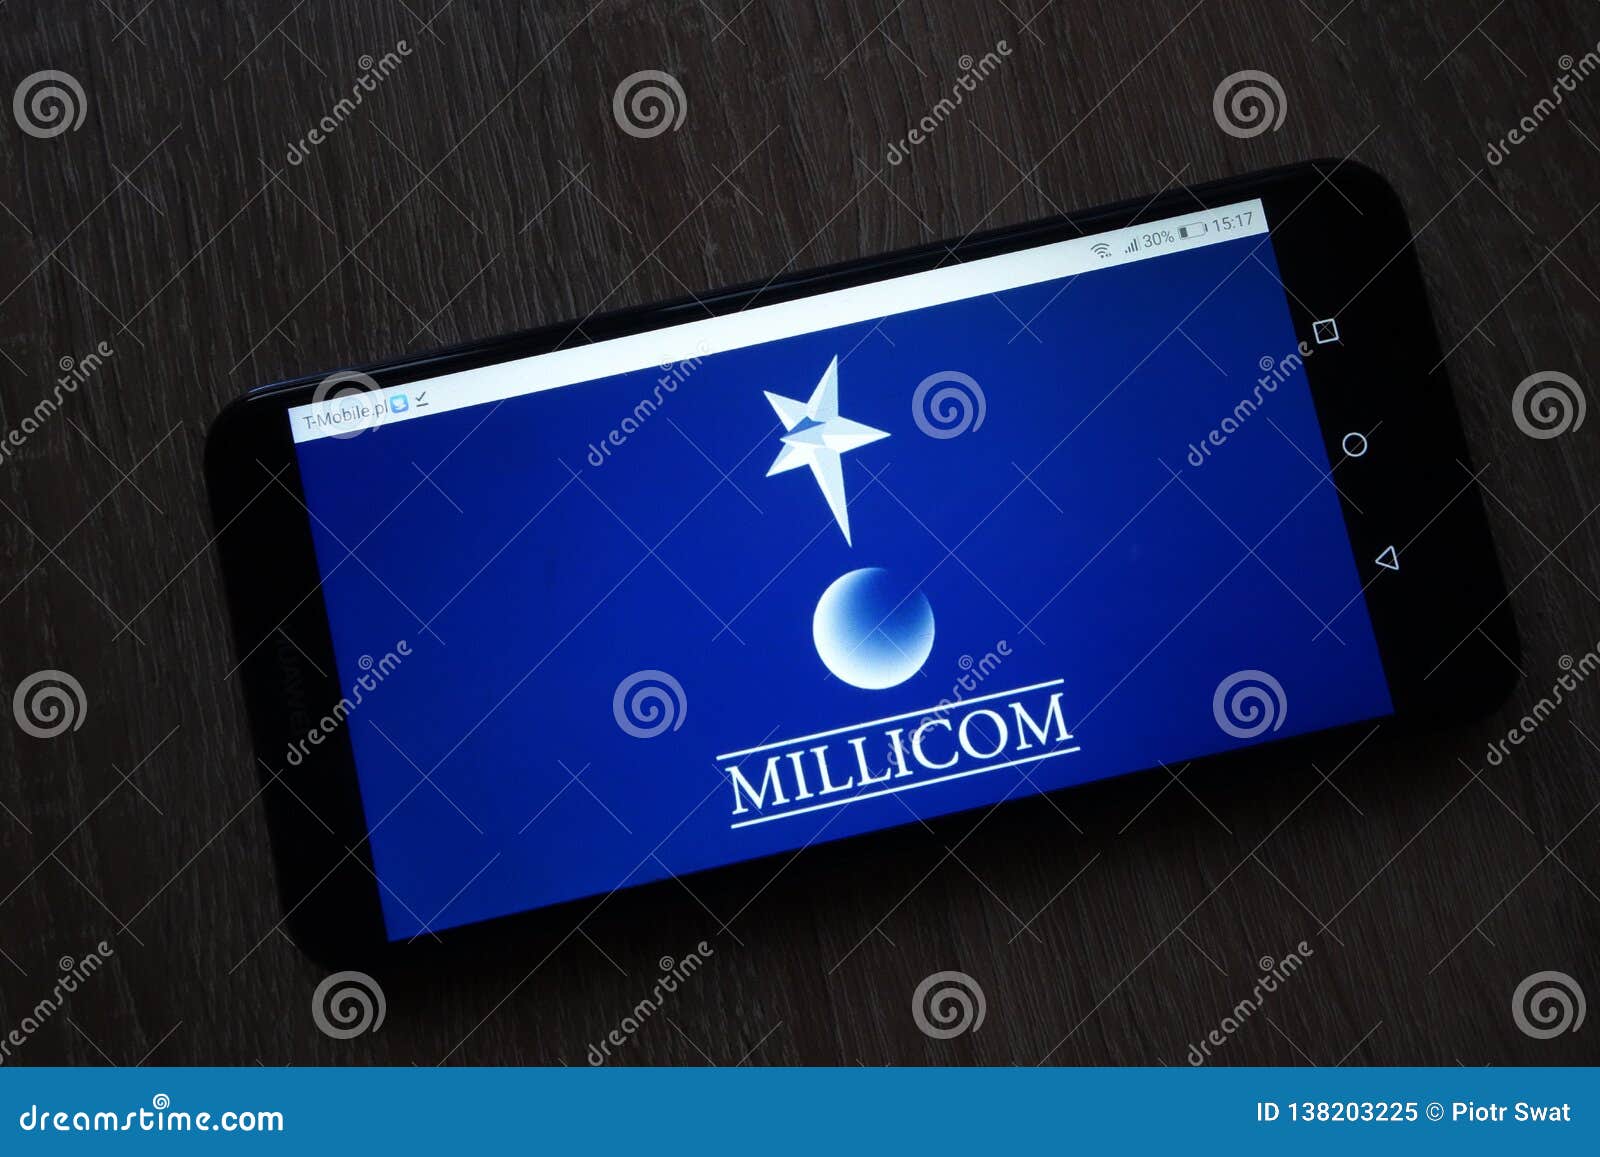 Millicom Logo Stock Photos - Free & Royalty-Free Stock Photos from ...